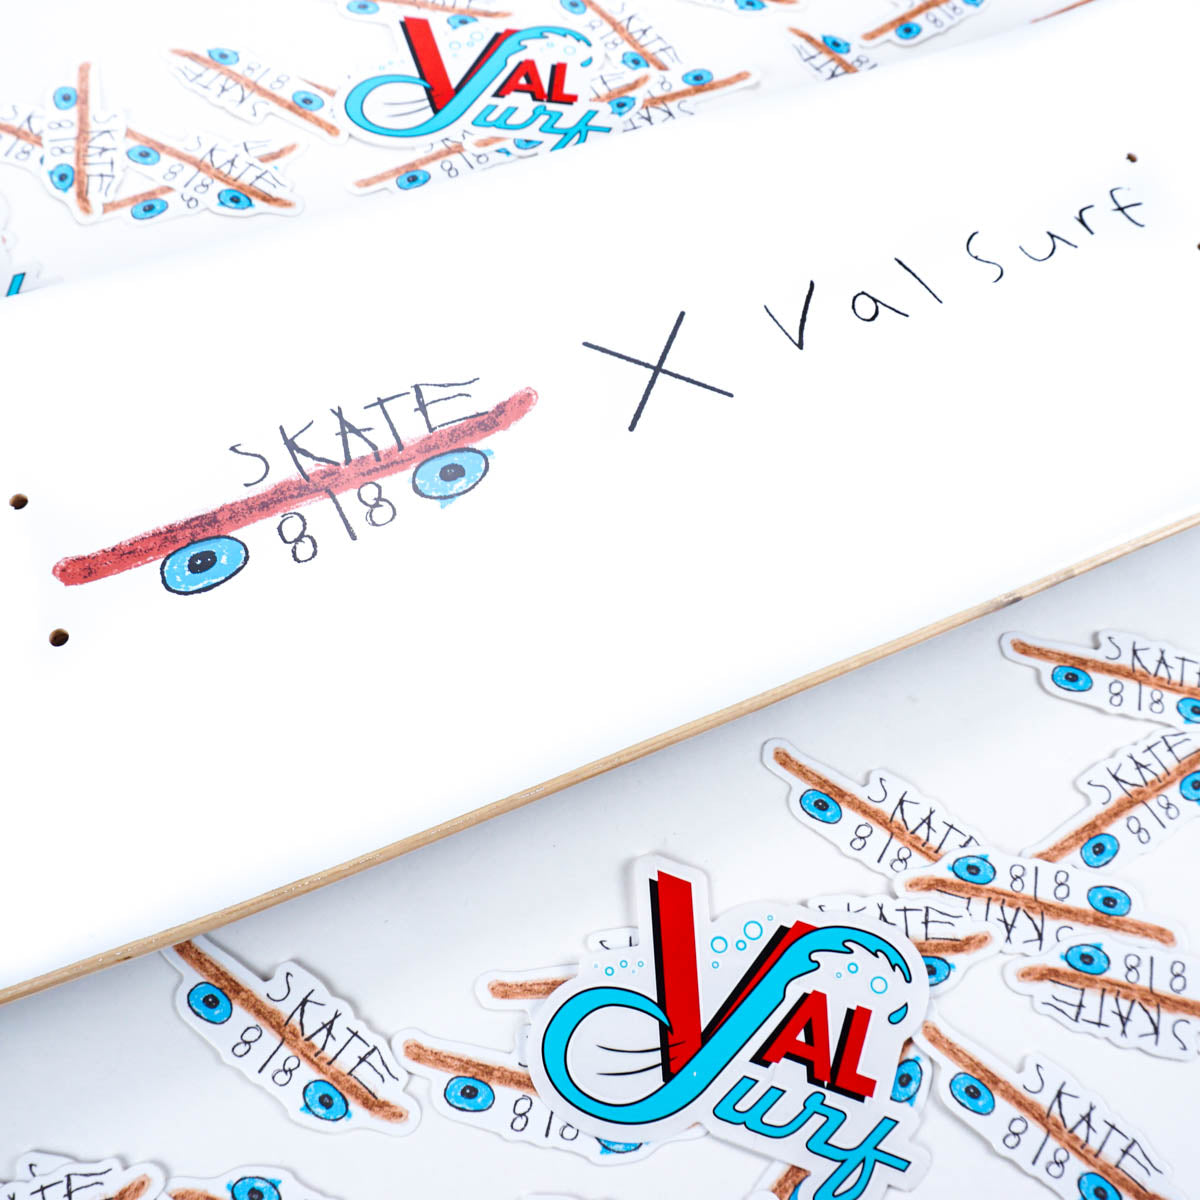 Skate 818 X Val Surf - 7.75